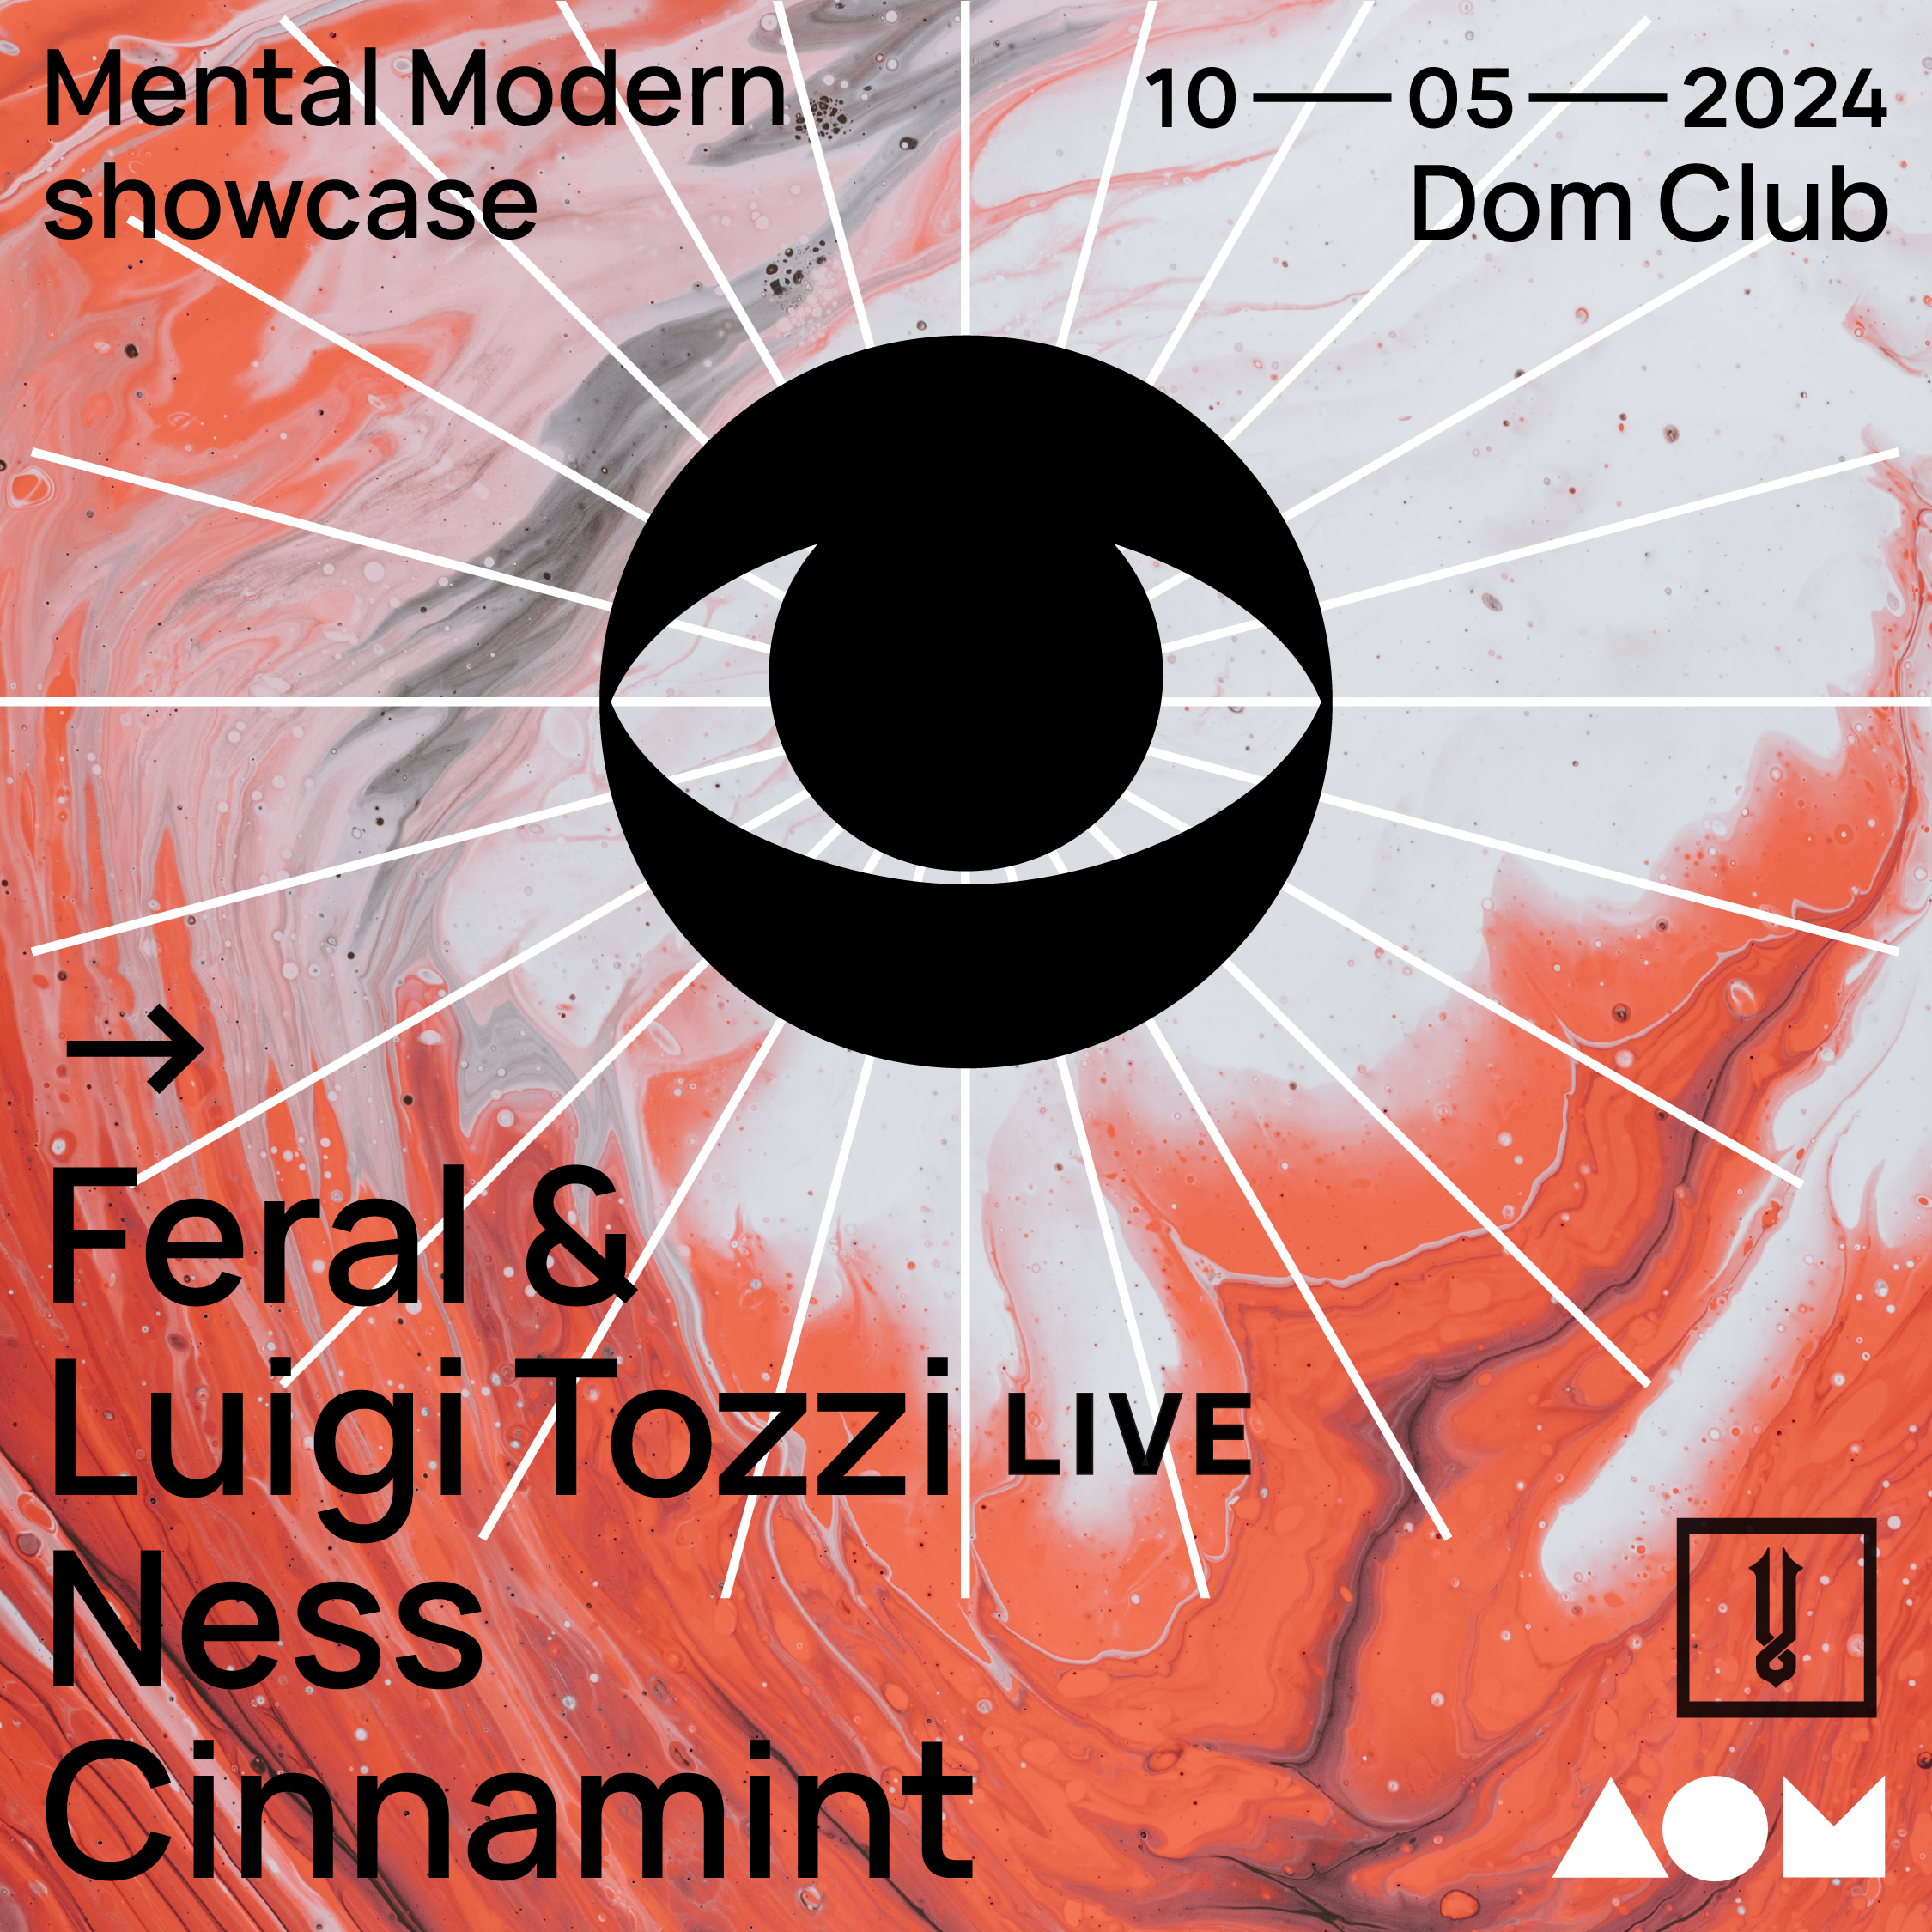 Mental Modern showcase with Feral & Luigi Tozzi - Ness - Cinnamint - フライヤー表